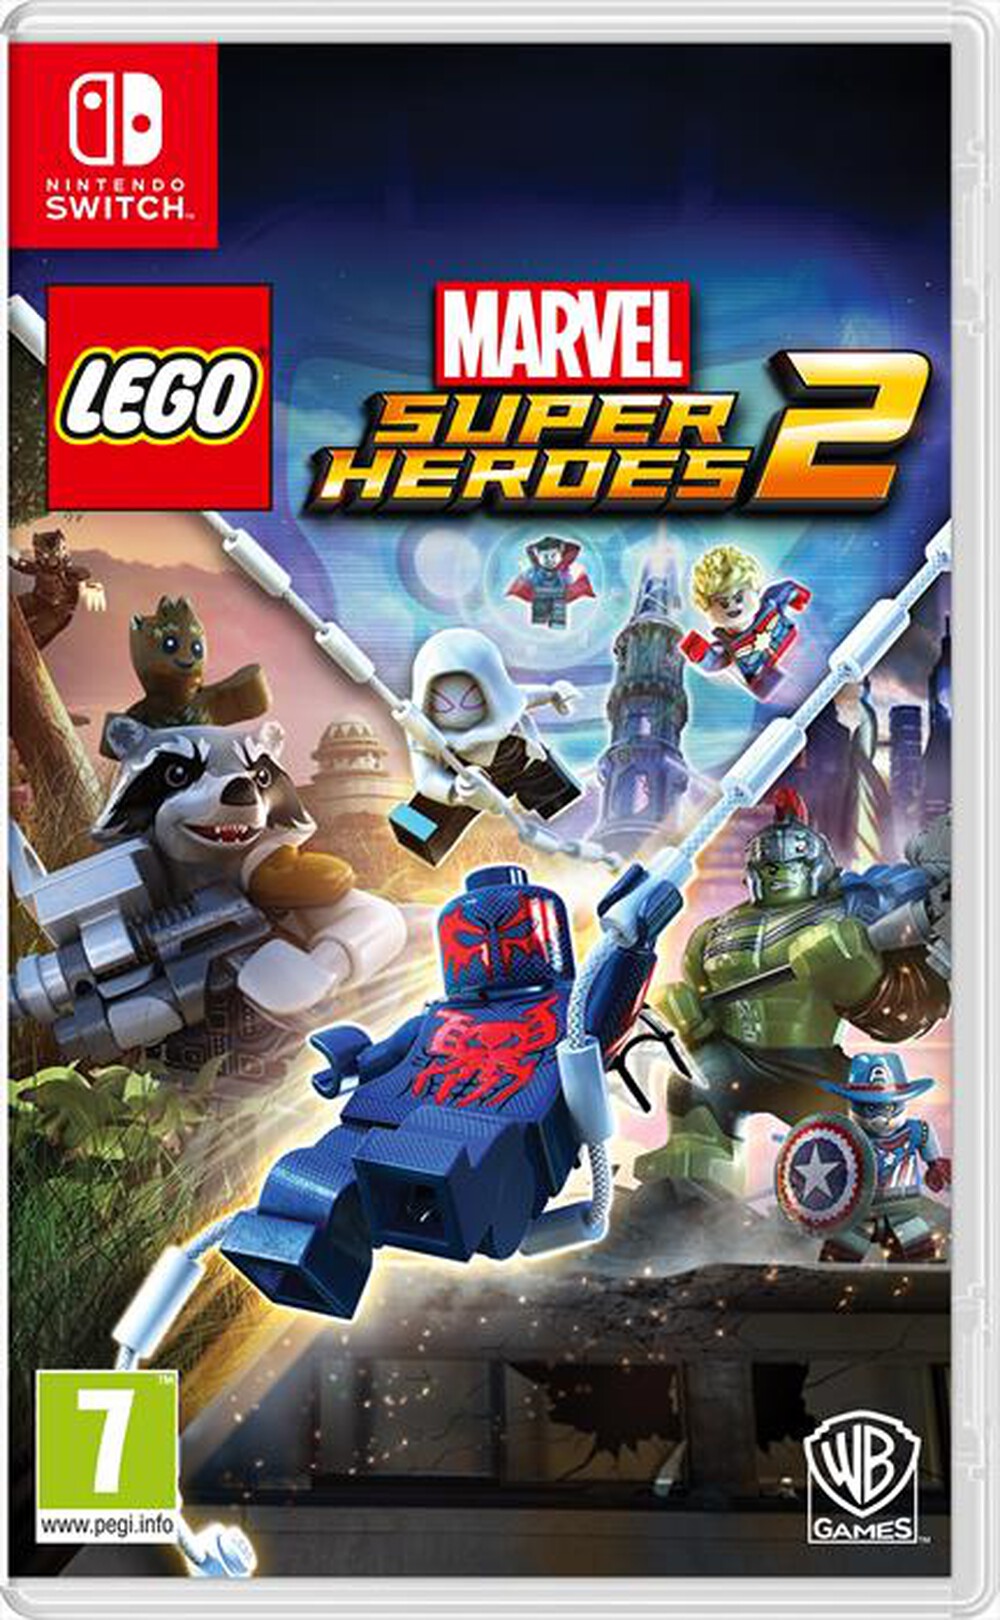 "WARNER GAMES - LEGO MARVEL SUPERHEROES 2 - SWITCH"